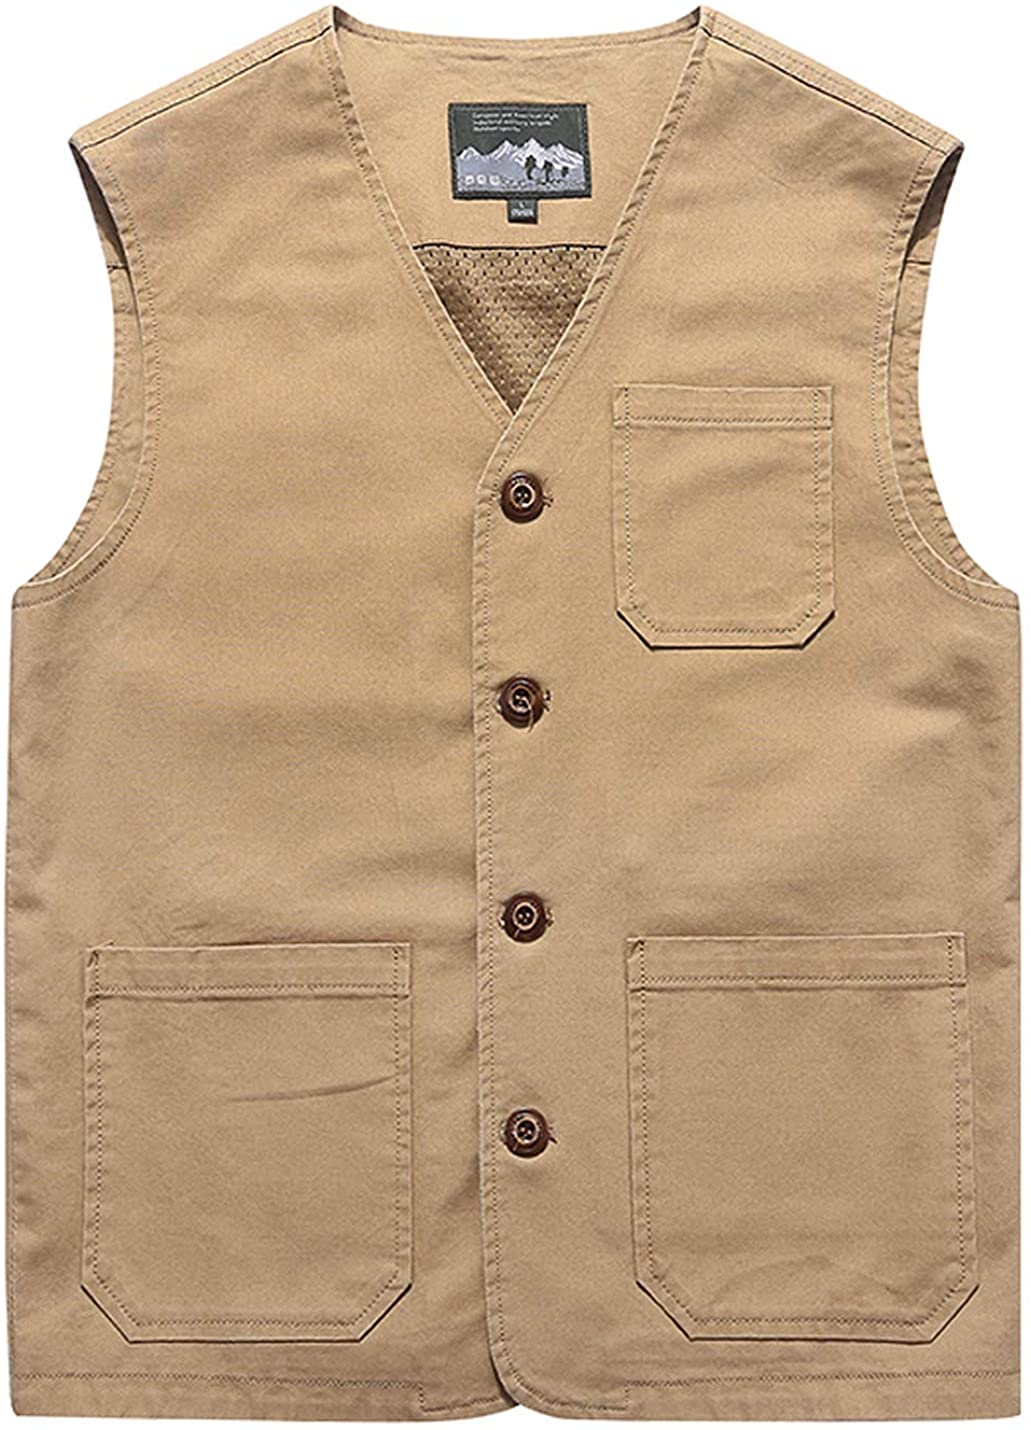 Gihuo Men's Casual Cotton Outdoor Fishing Safari Travel Vest 